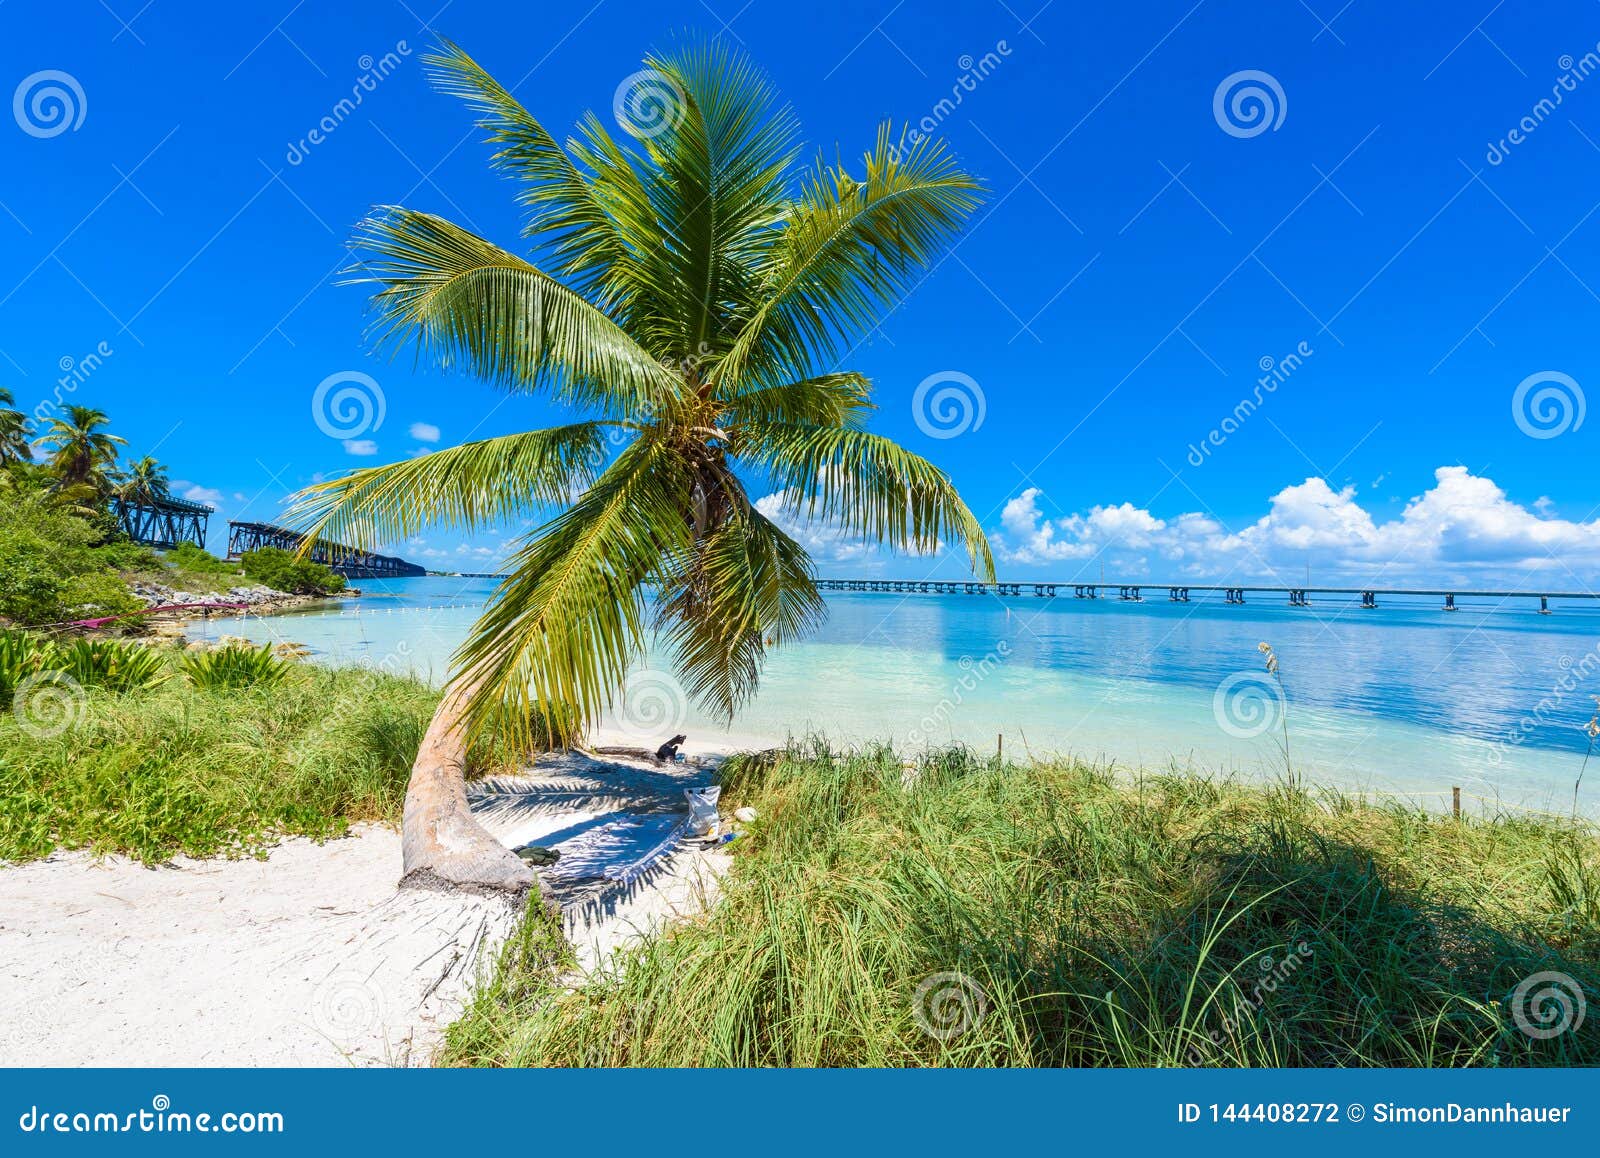 bahia honda state park - calusa beach, florida keys - tropical coast with paradise beaches - usa